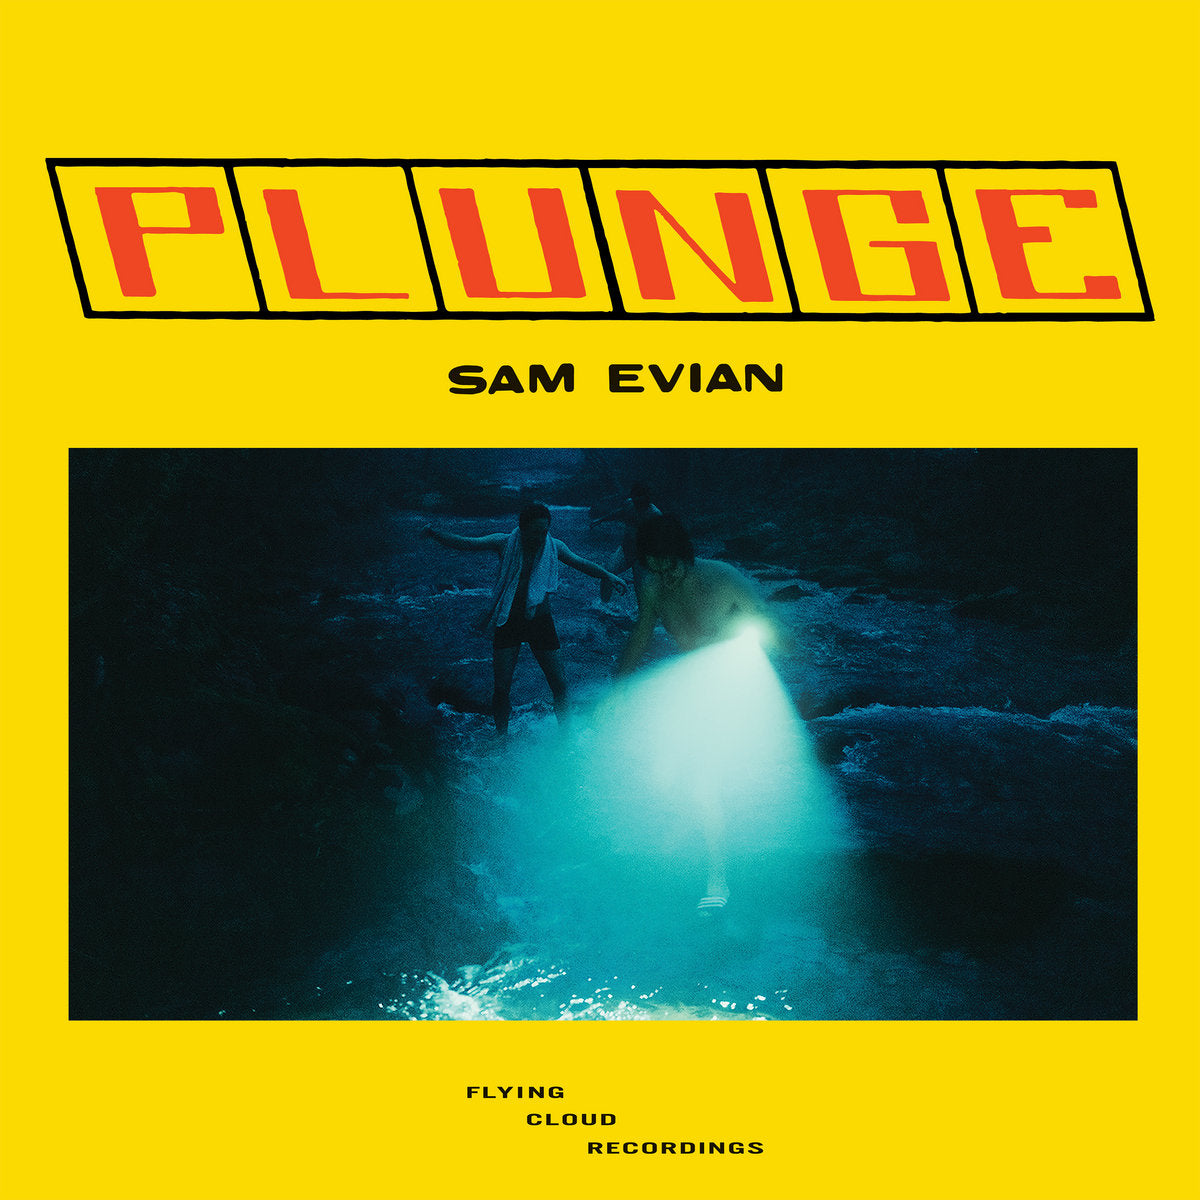 Sam Evian ~ Plunge